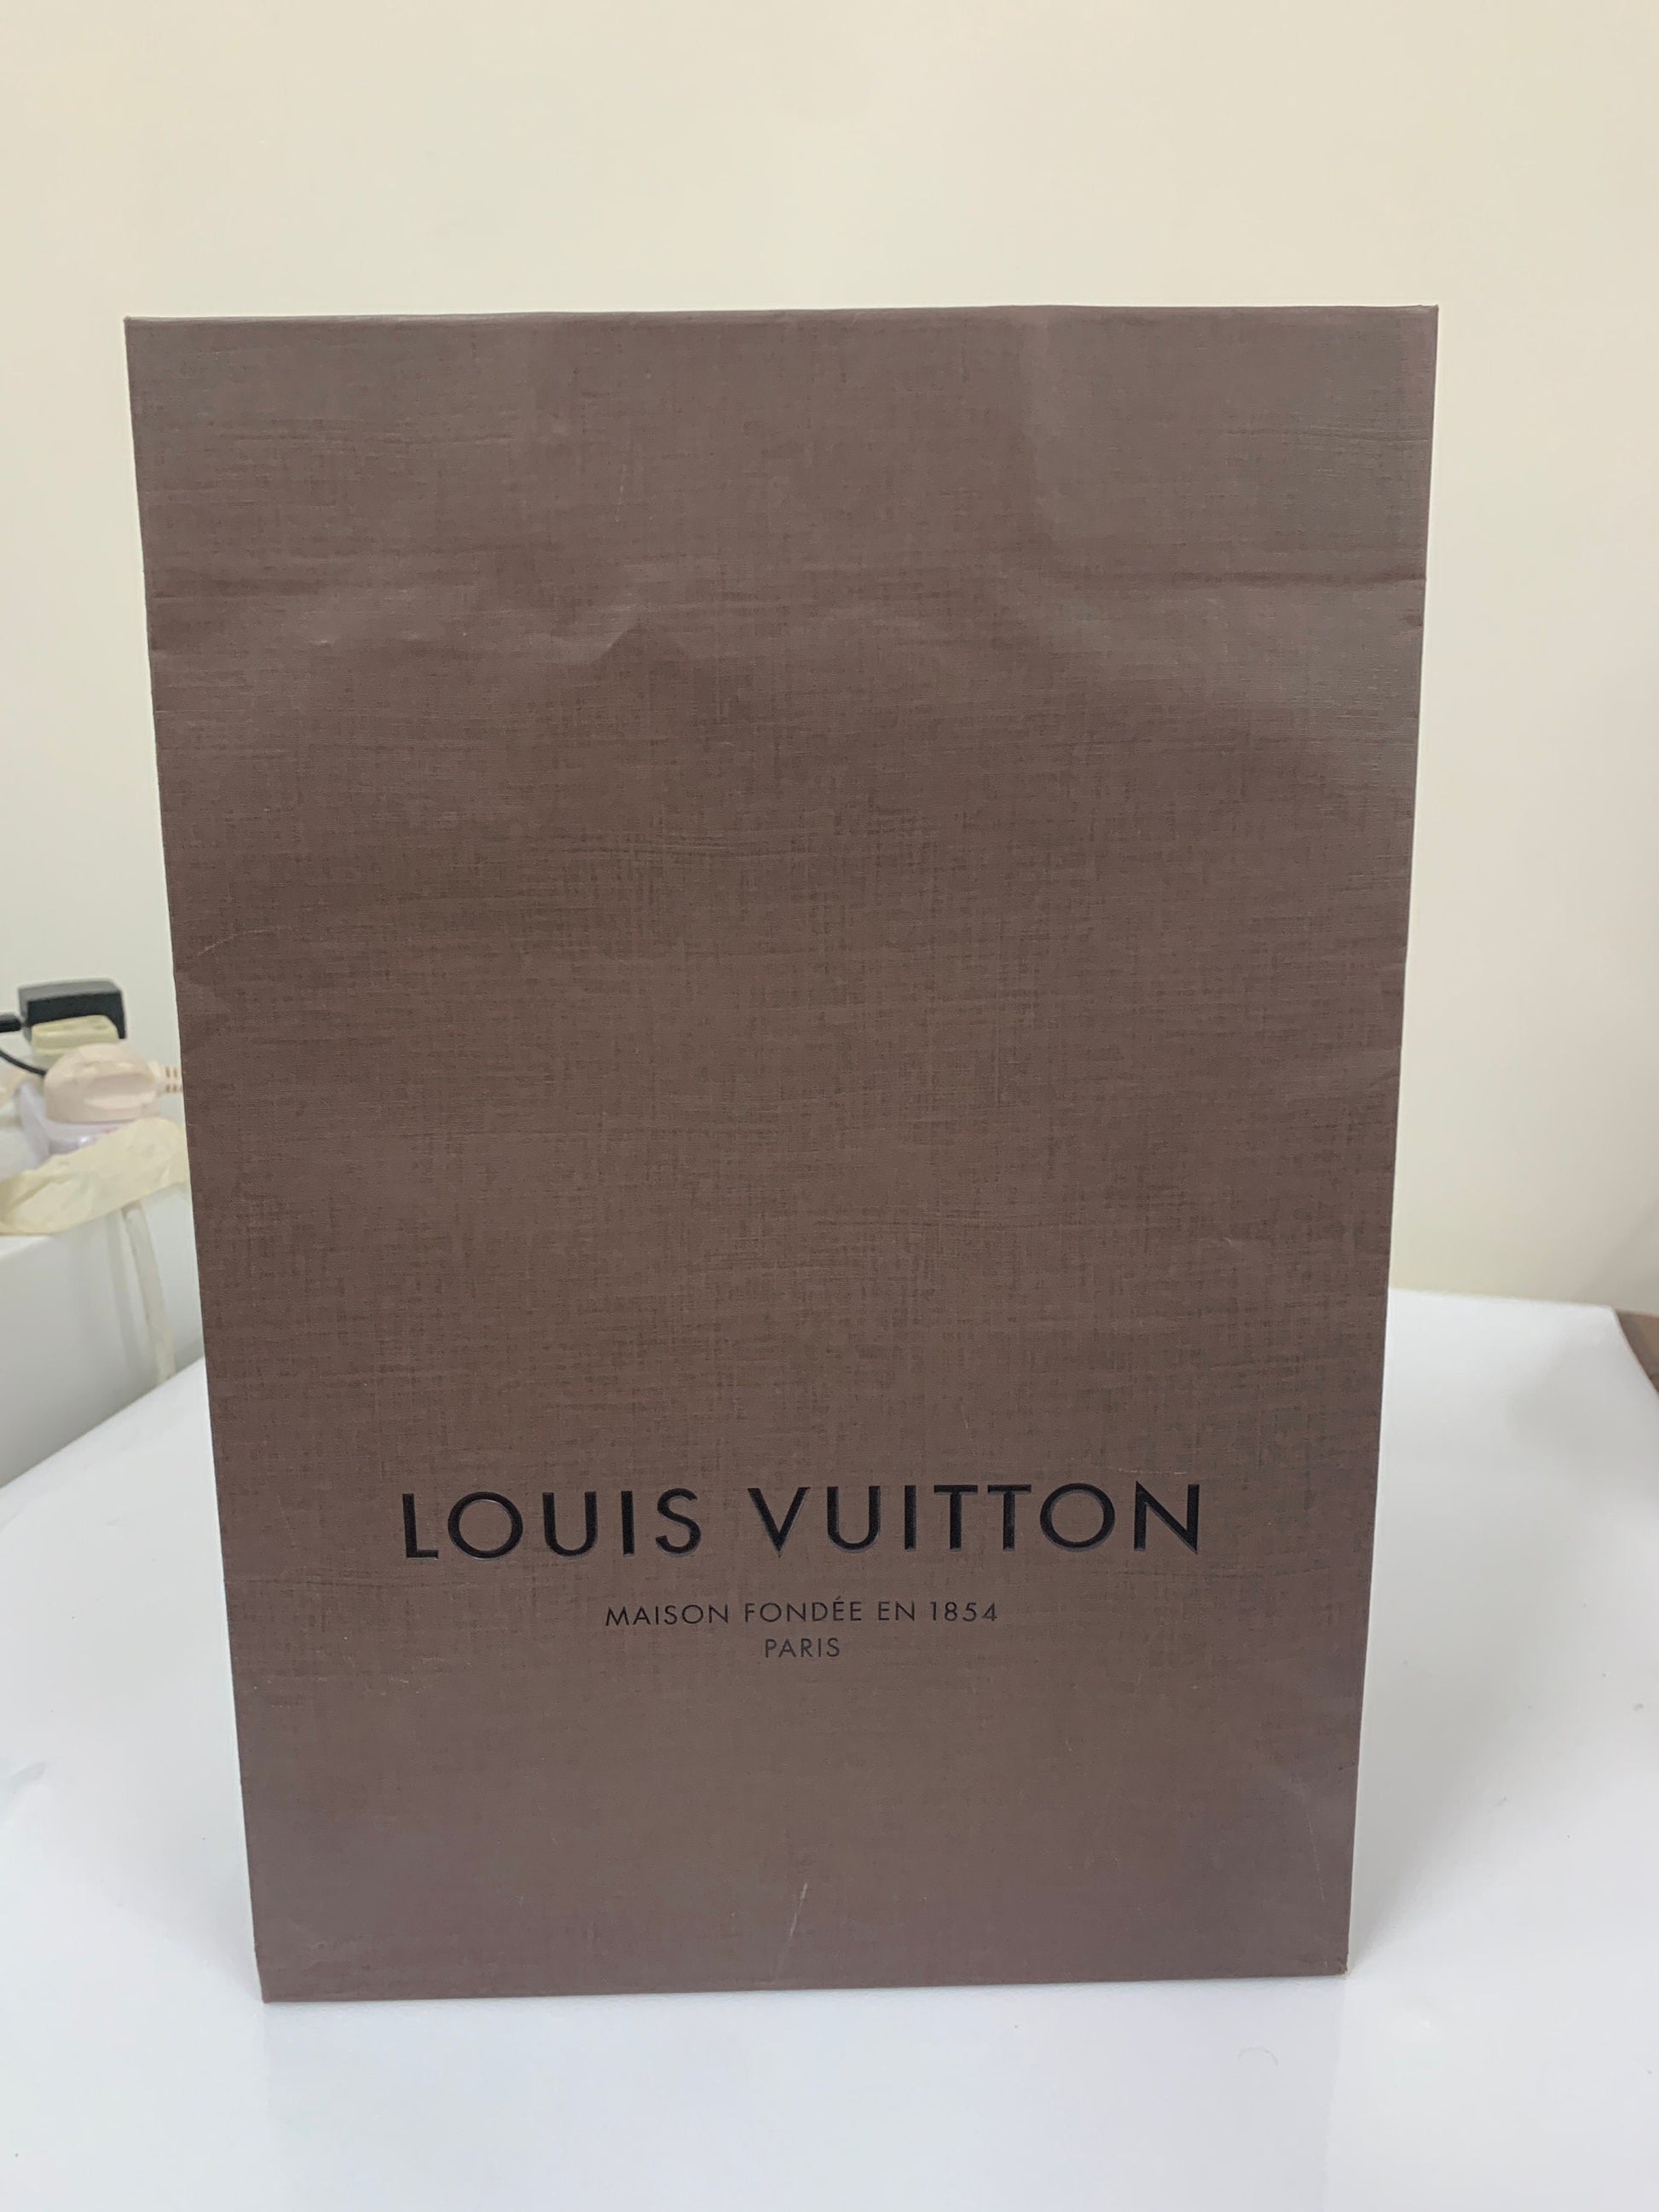 Authentic Louis Vuitton Box and Paper Bag